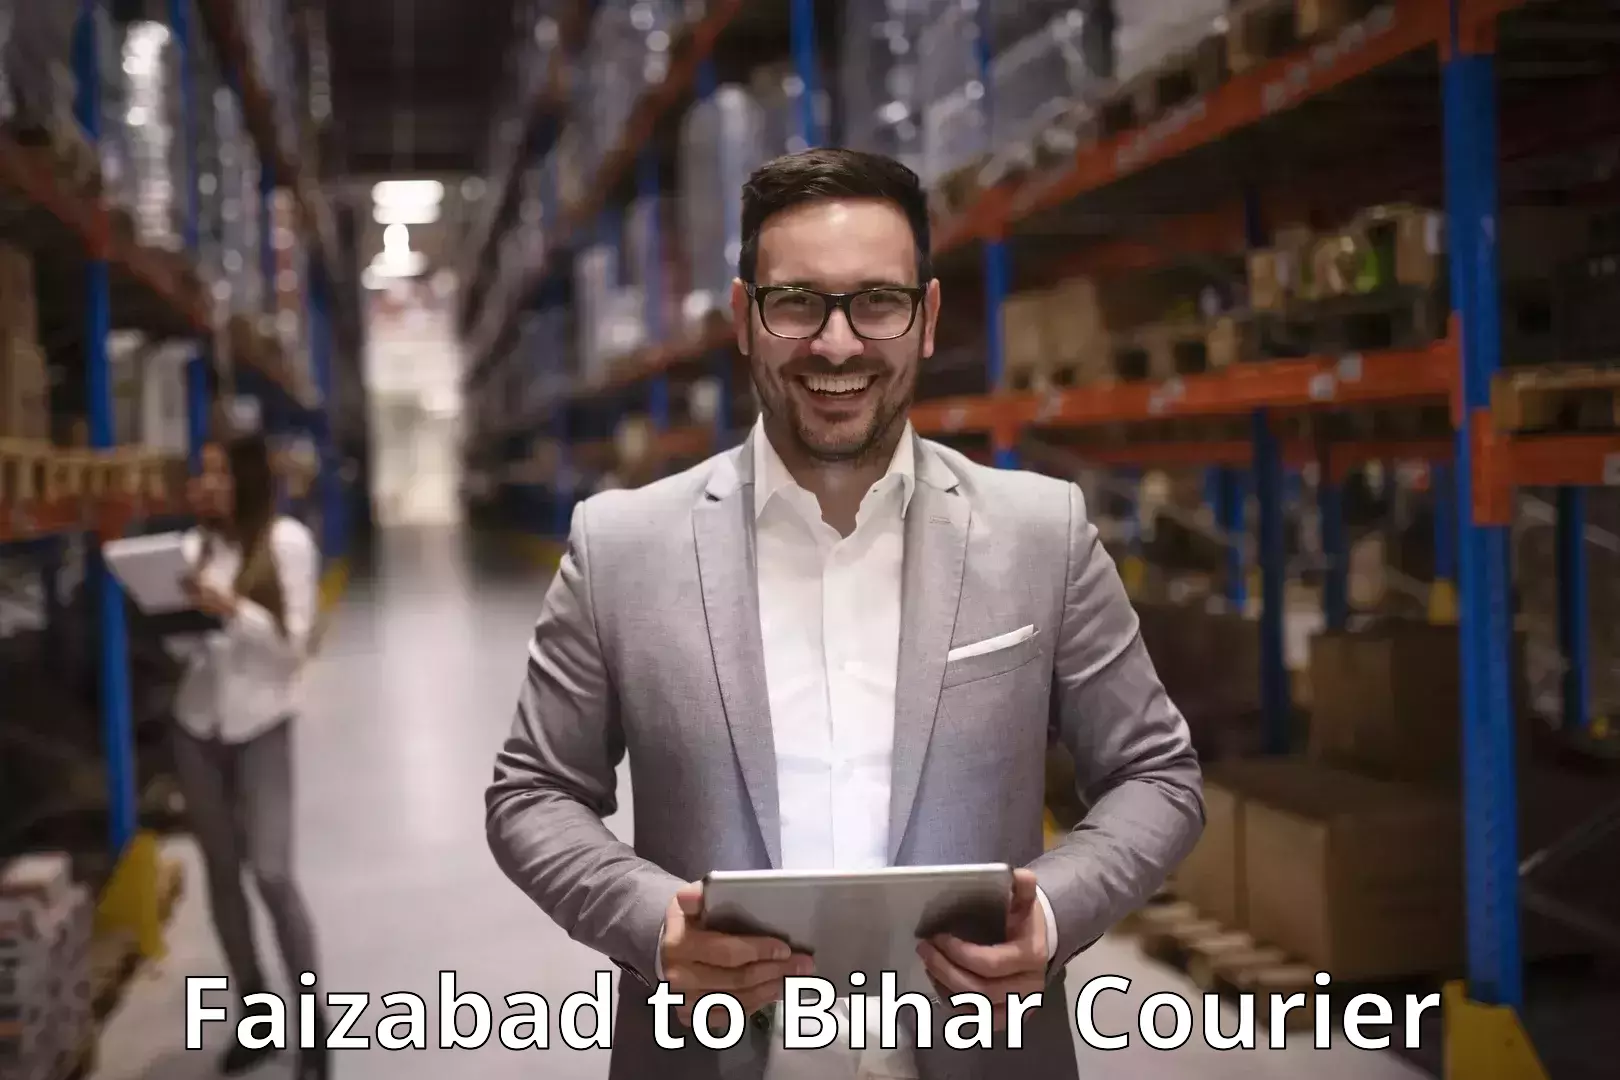 Courier service comparison Faizabad to Bihar